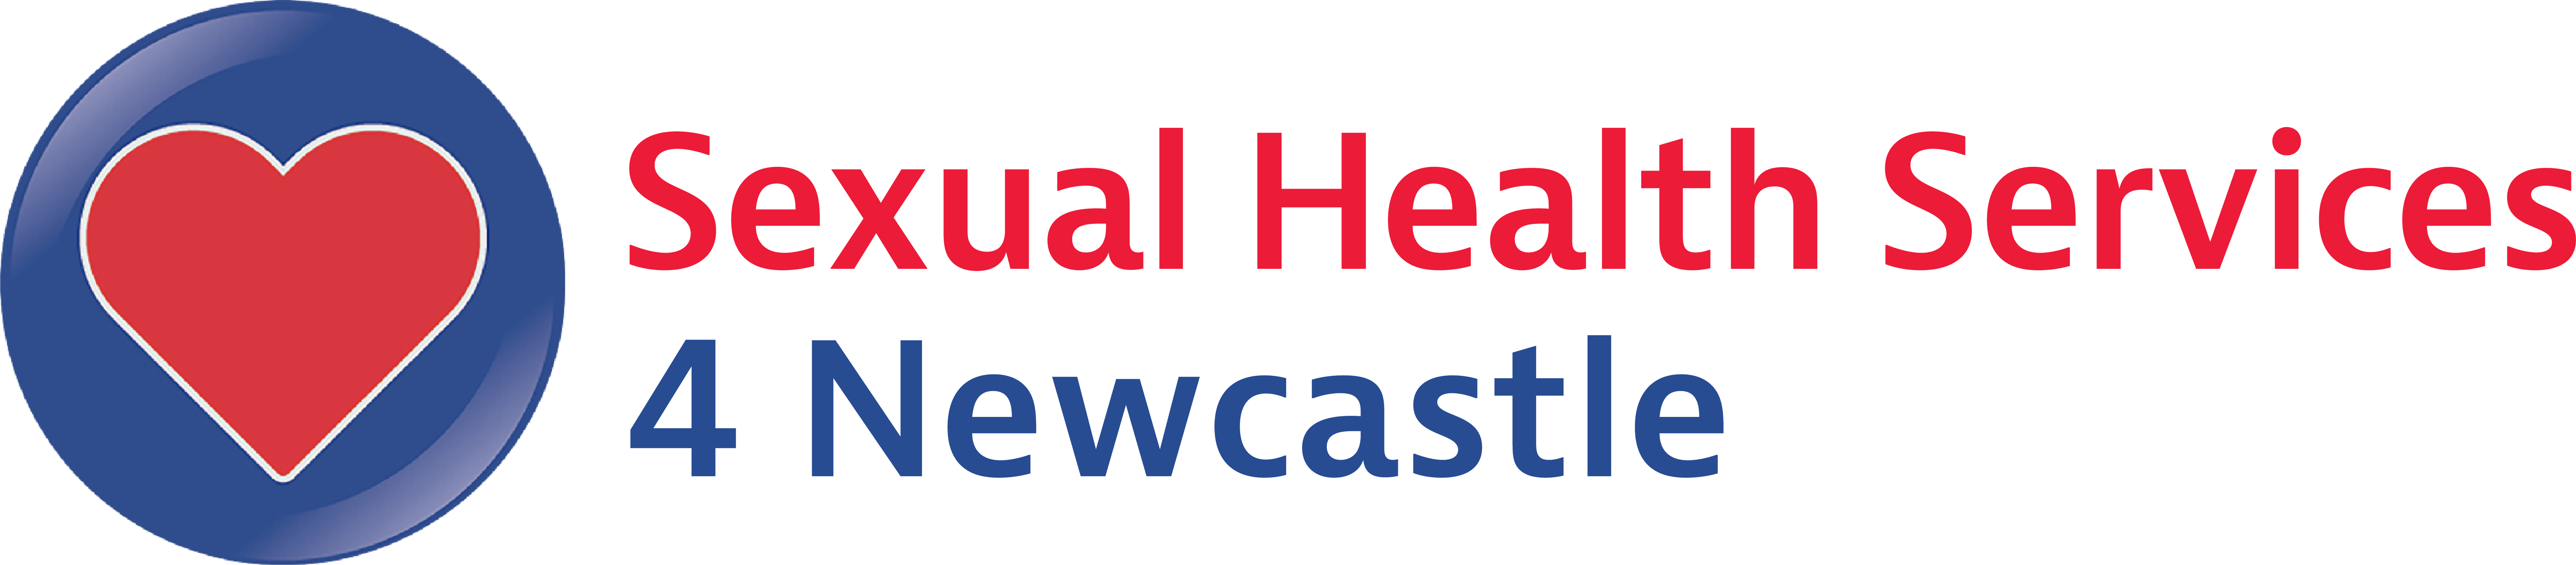 Sexual Health Services 4 Newcastle Logo